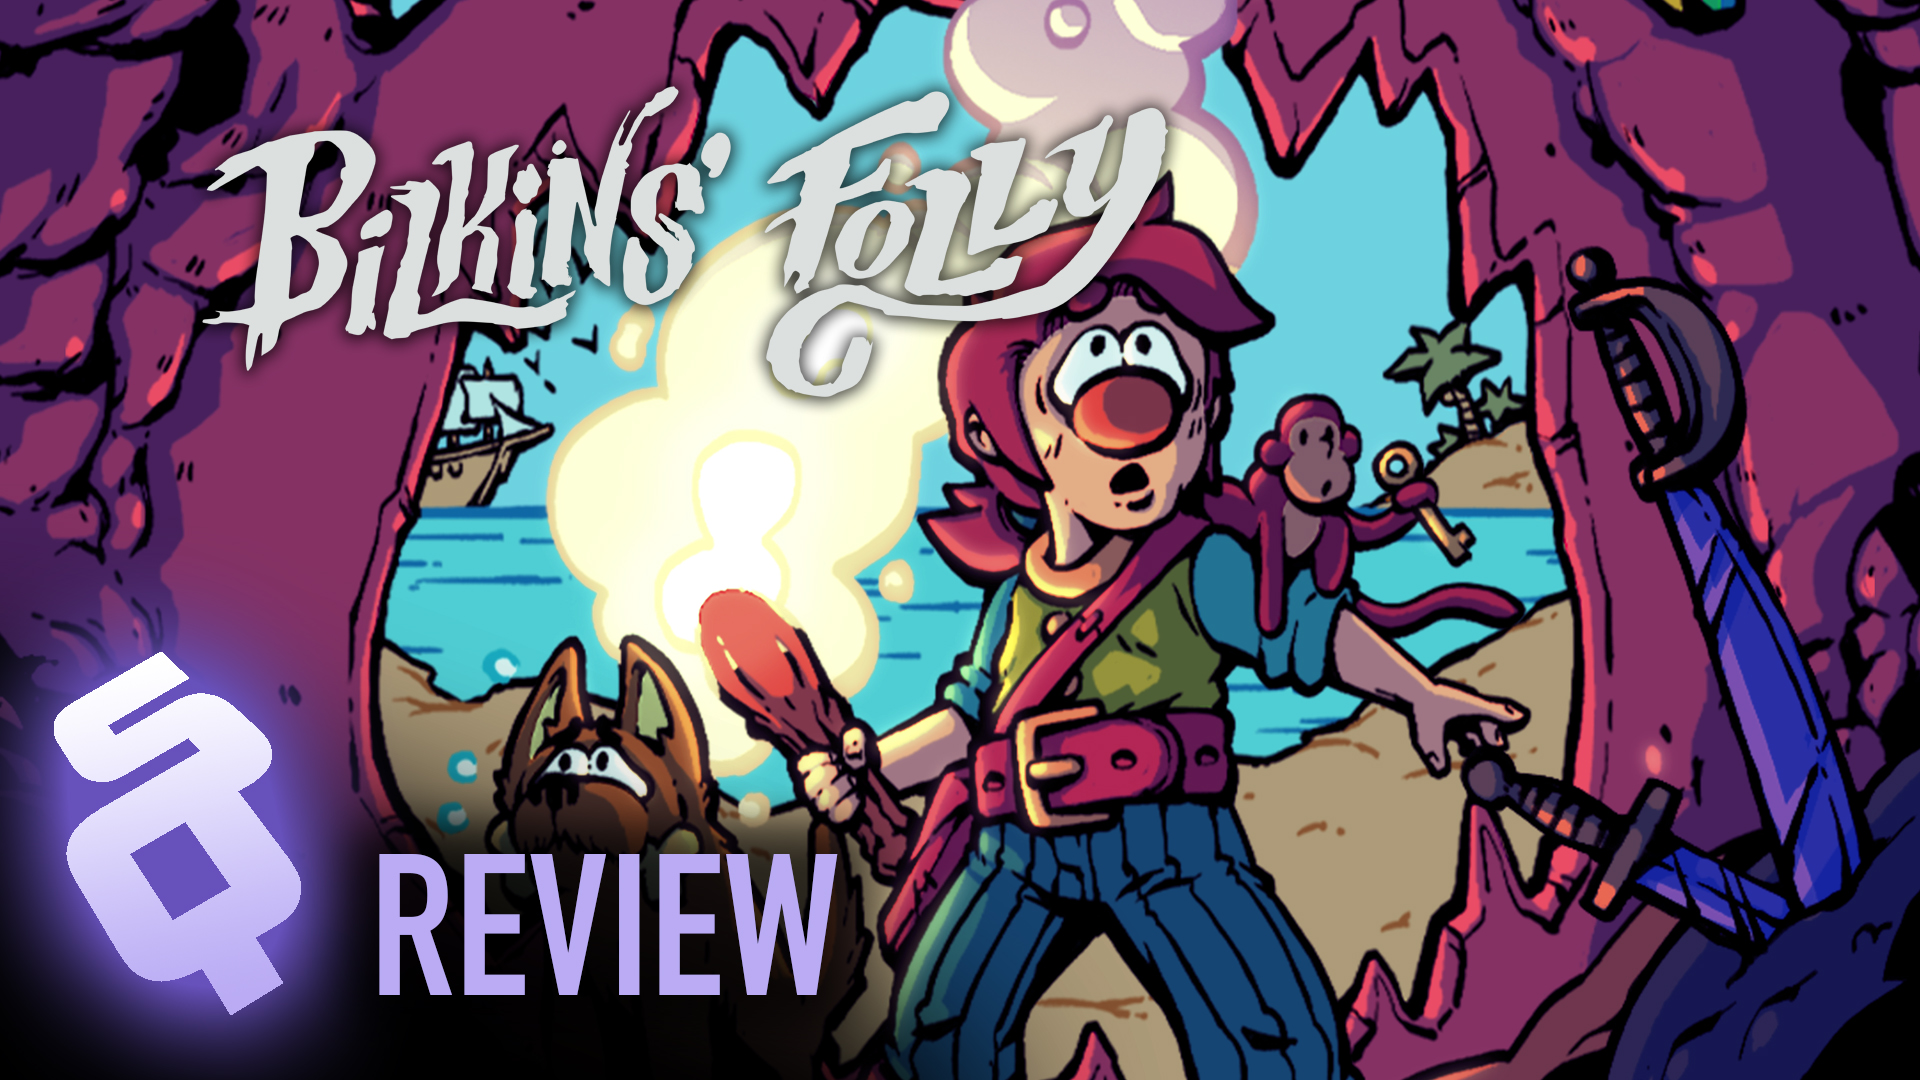 Bilkins’ Folly review